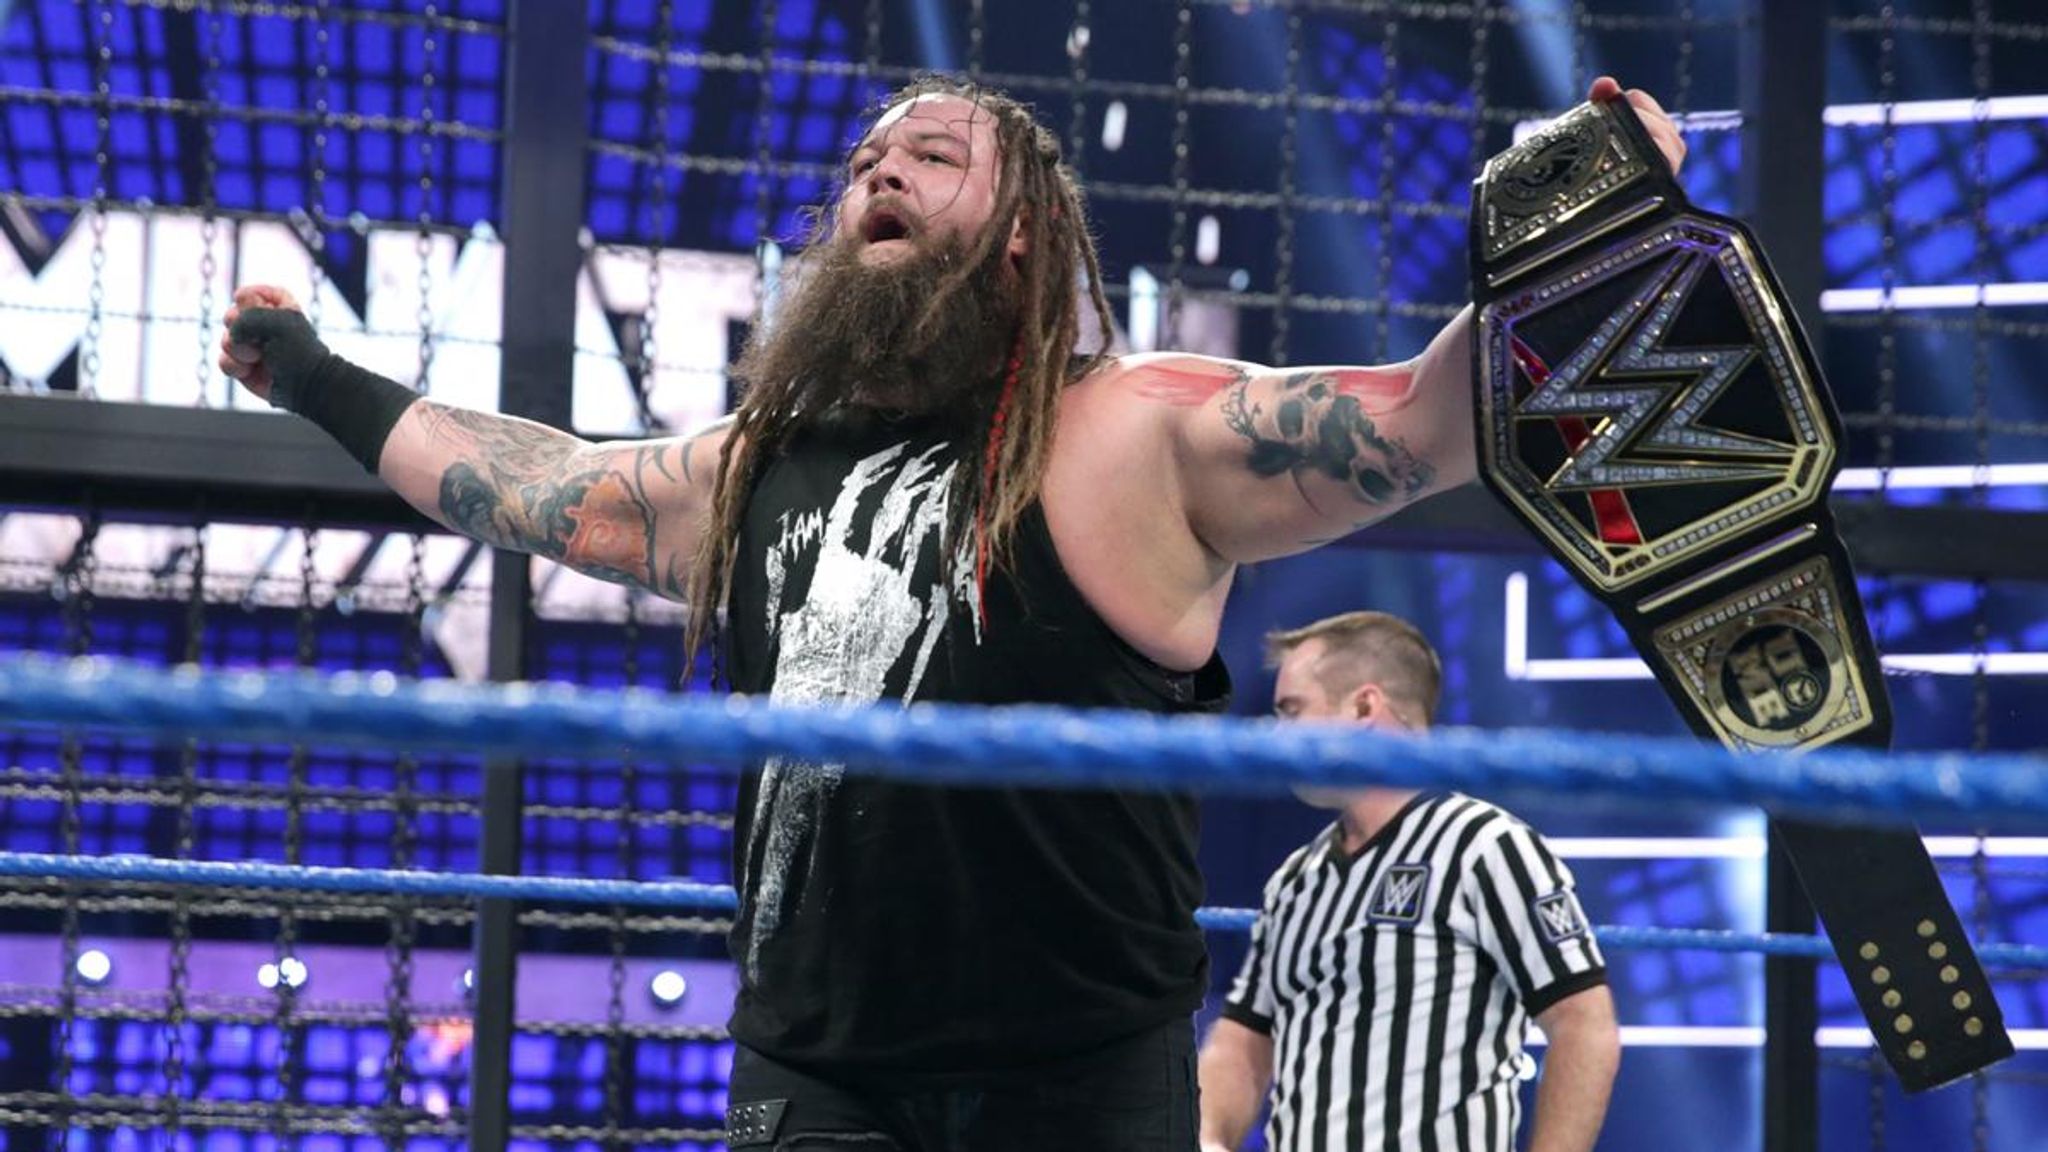 Bray Wyatt's new ring attire? : r/SquaredCircle